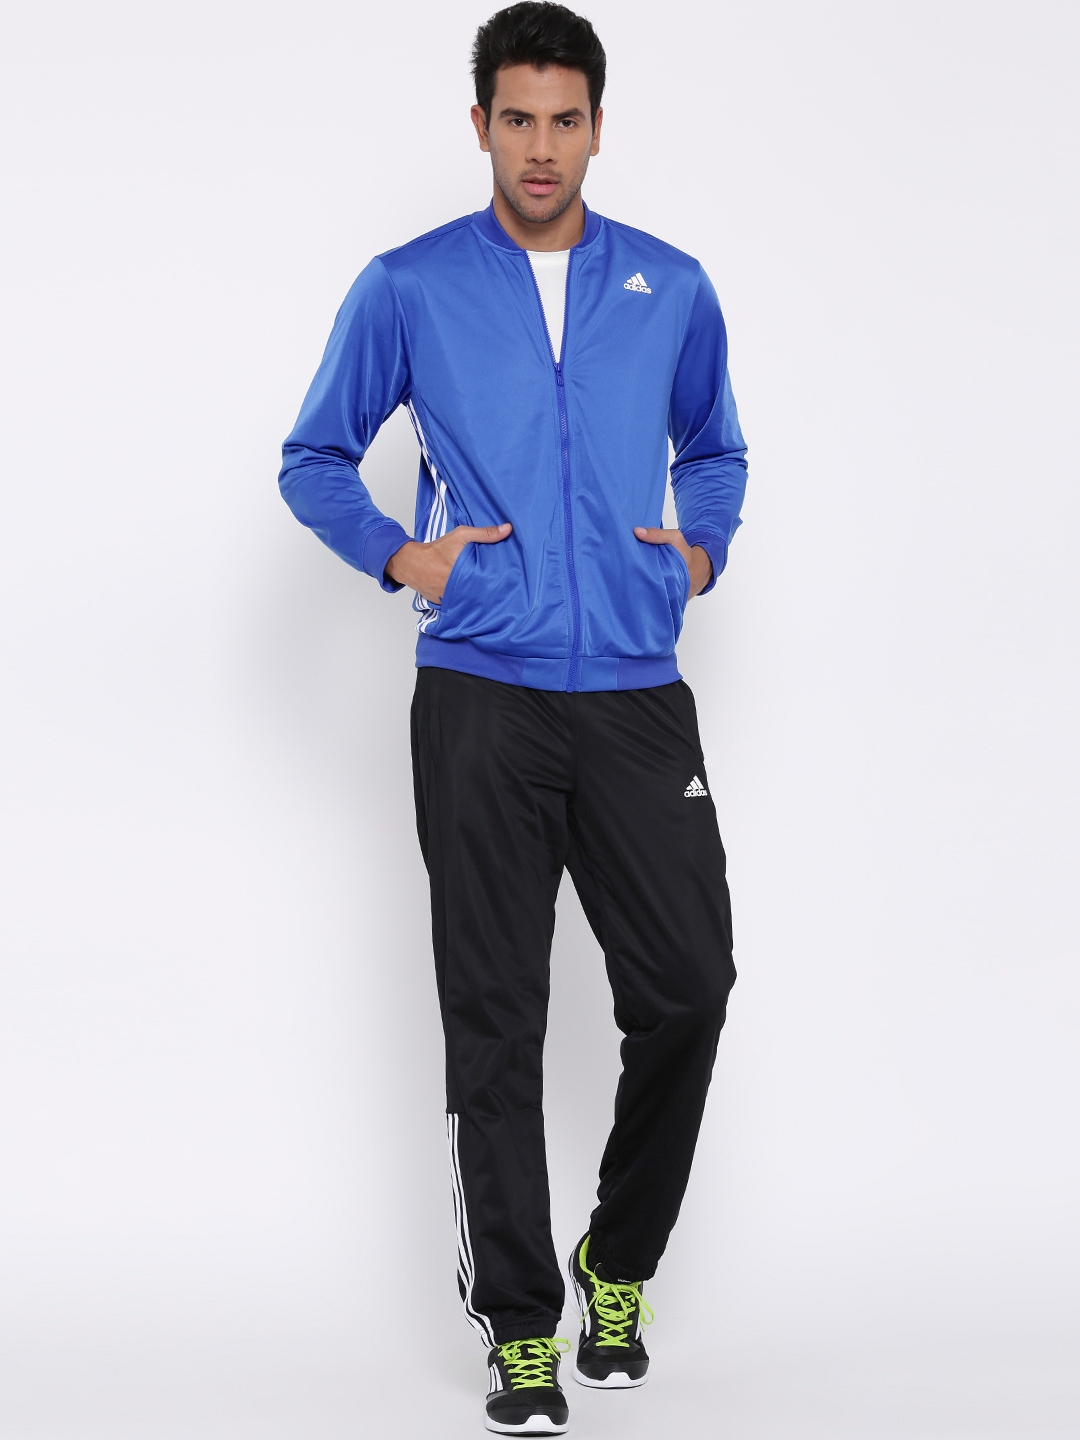 adidas blue track suit